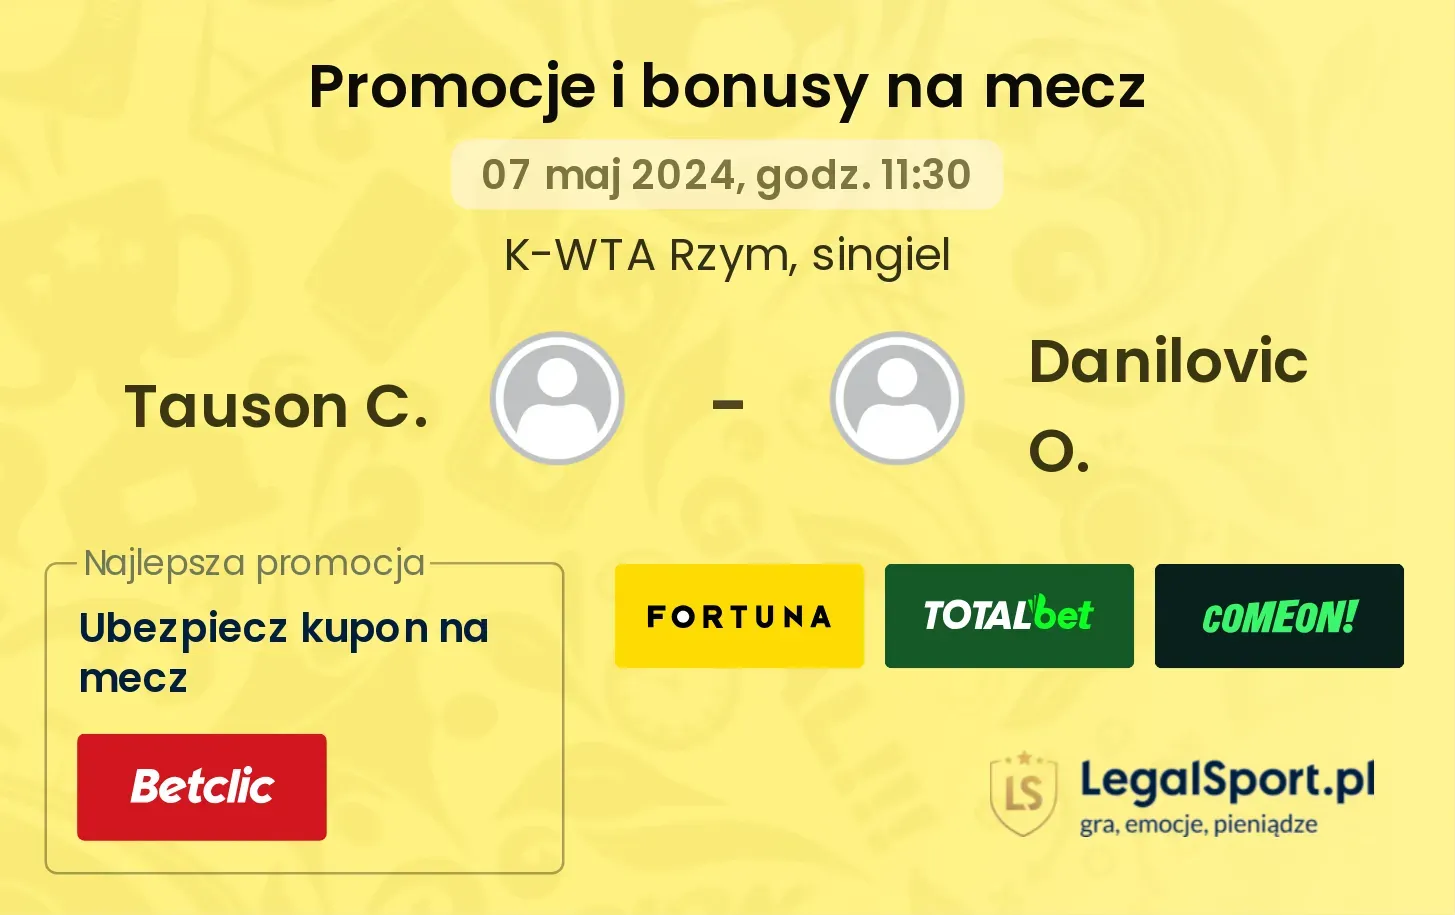 Tauson C. - Danilovic O. promocje bonusy na mecz